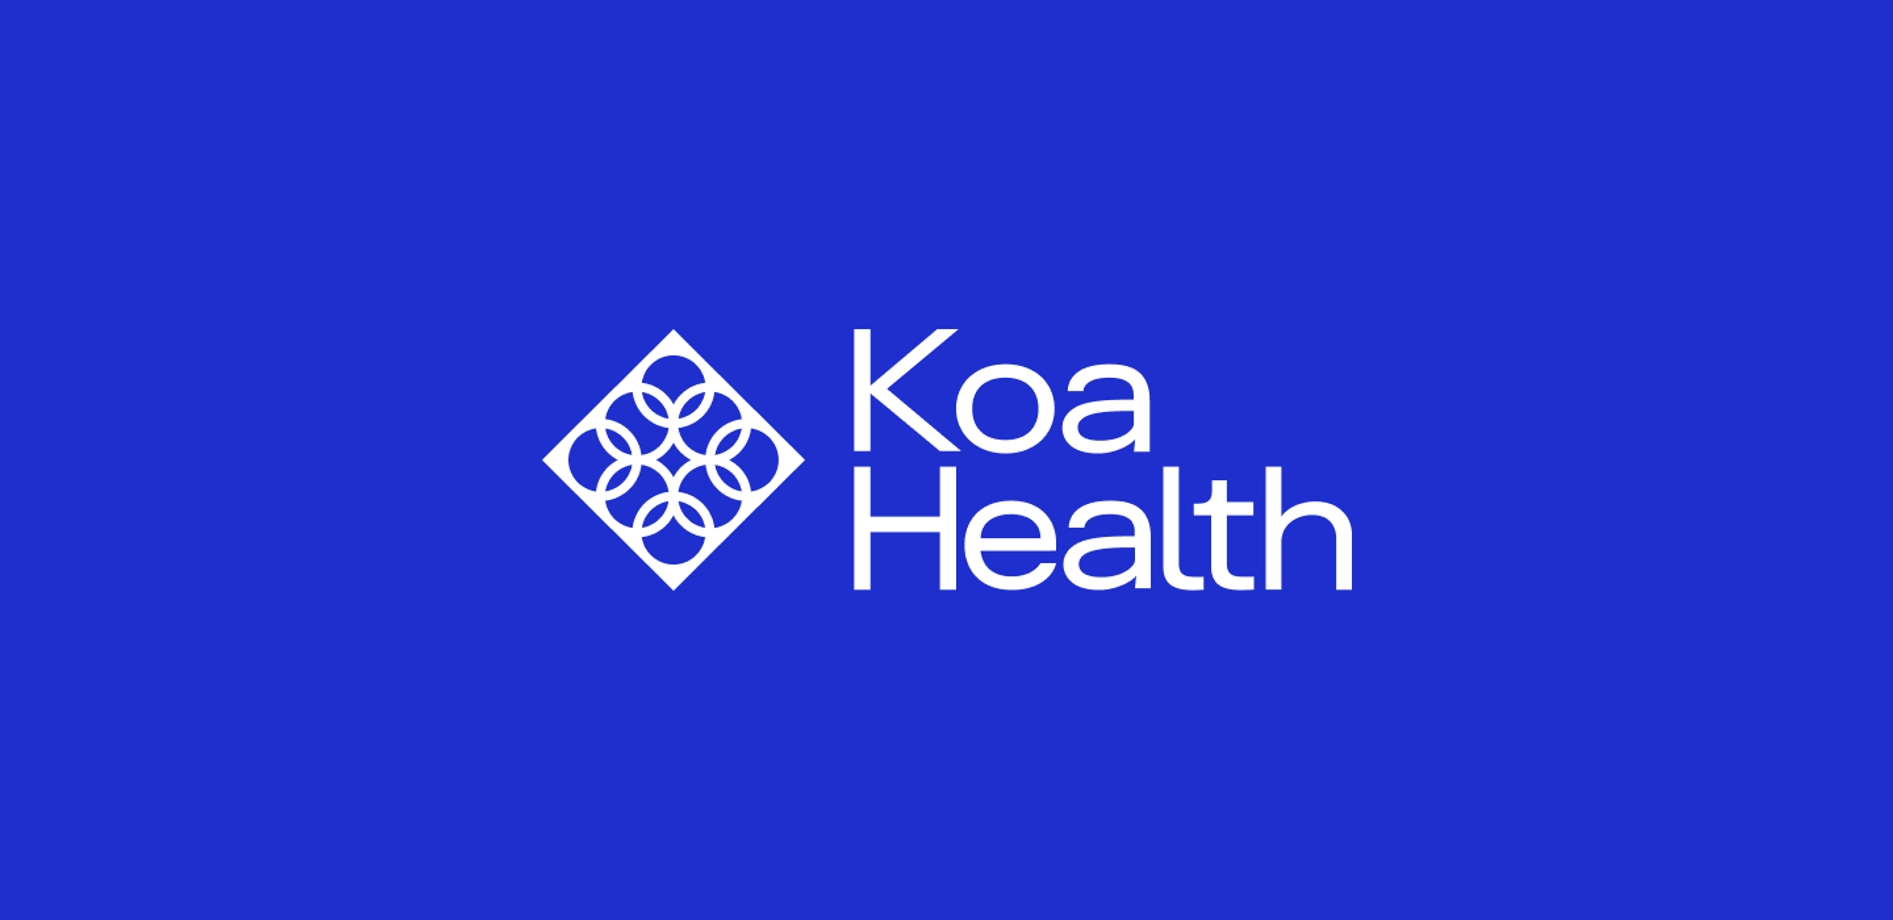 Koa Health logo on on a field of deep blue